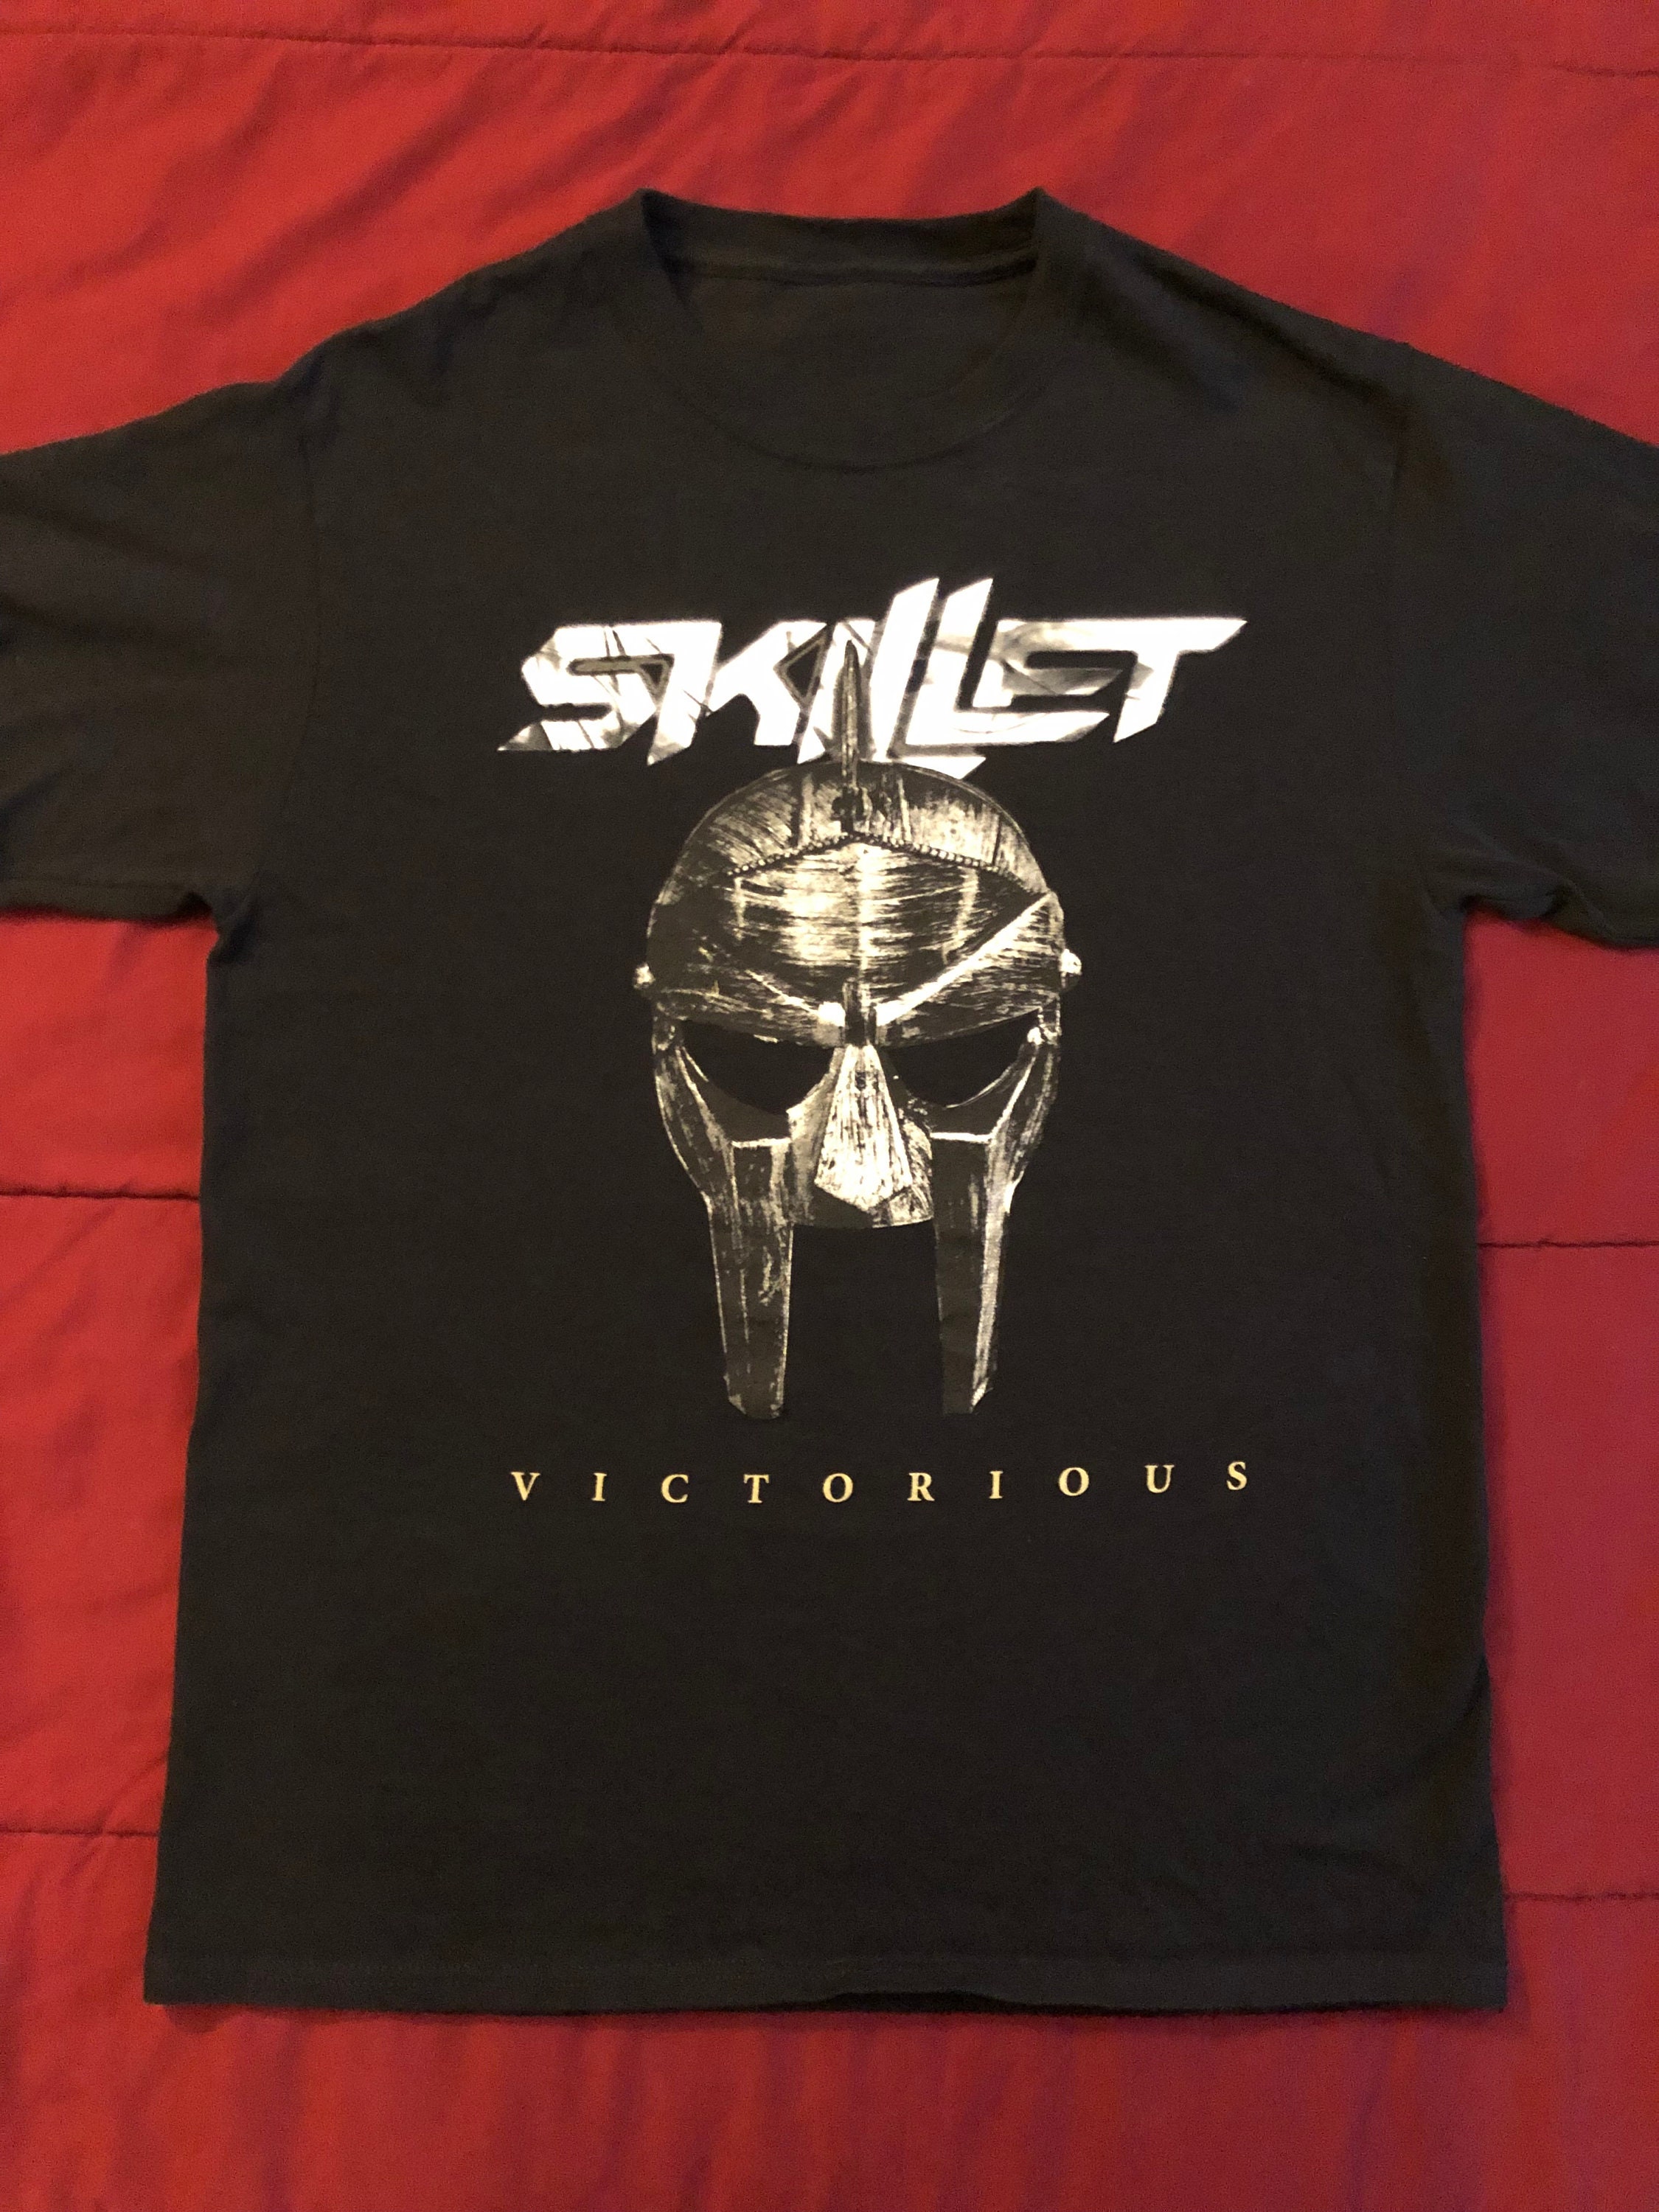 Skillet - Victorious - Christian Hard Rock Band Concert Tour T Shirt